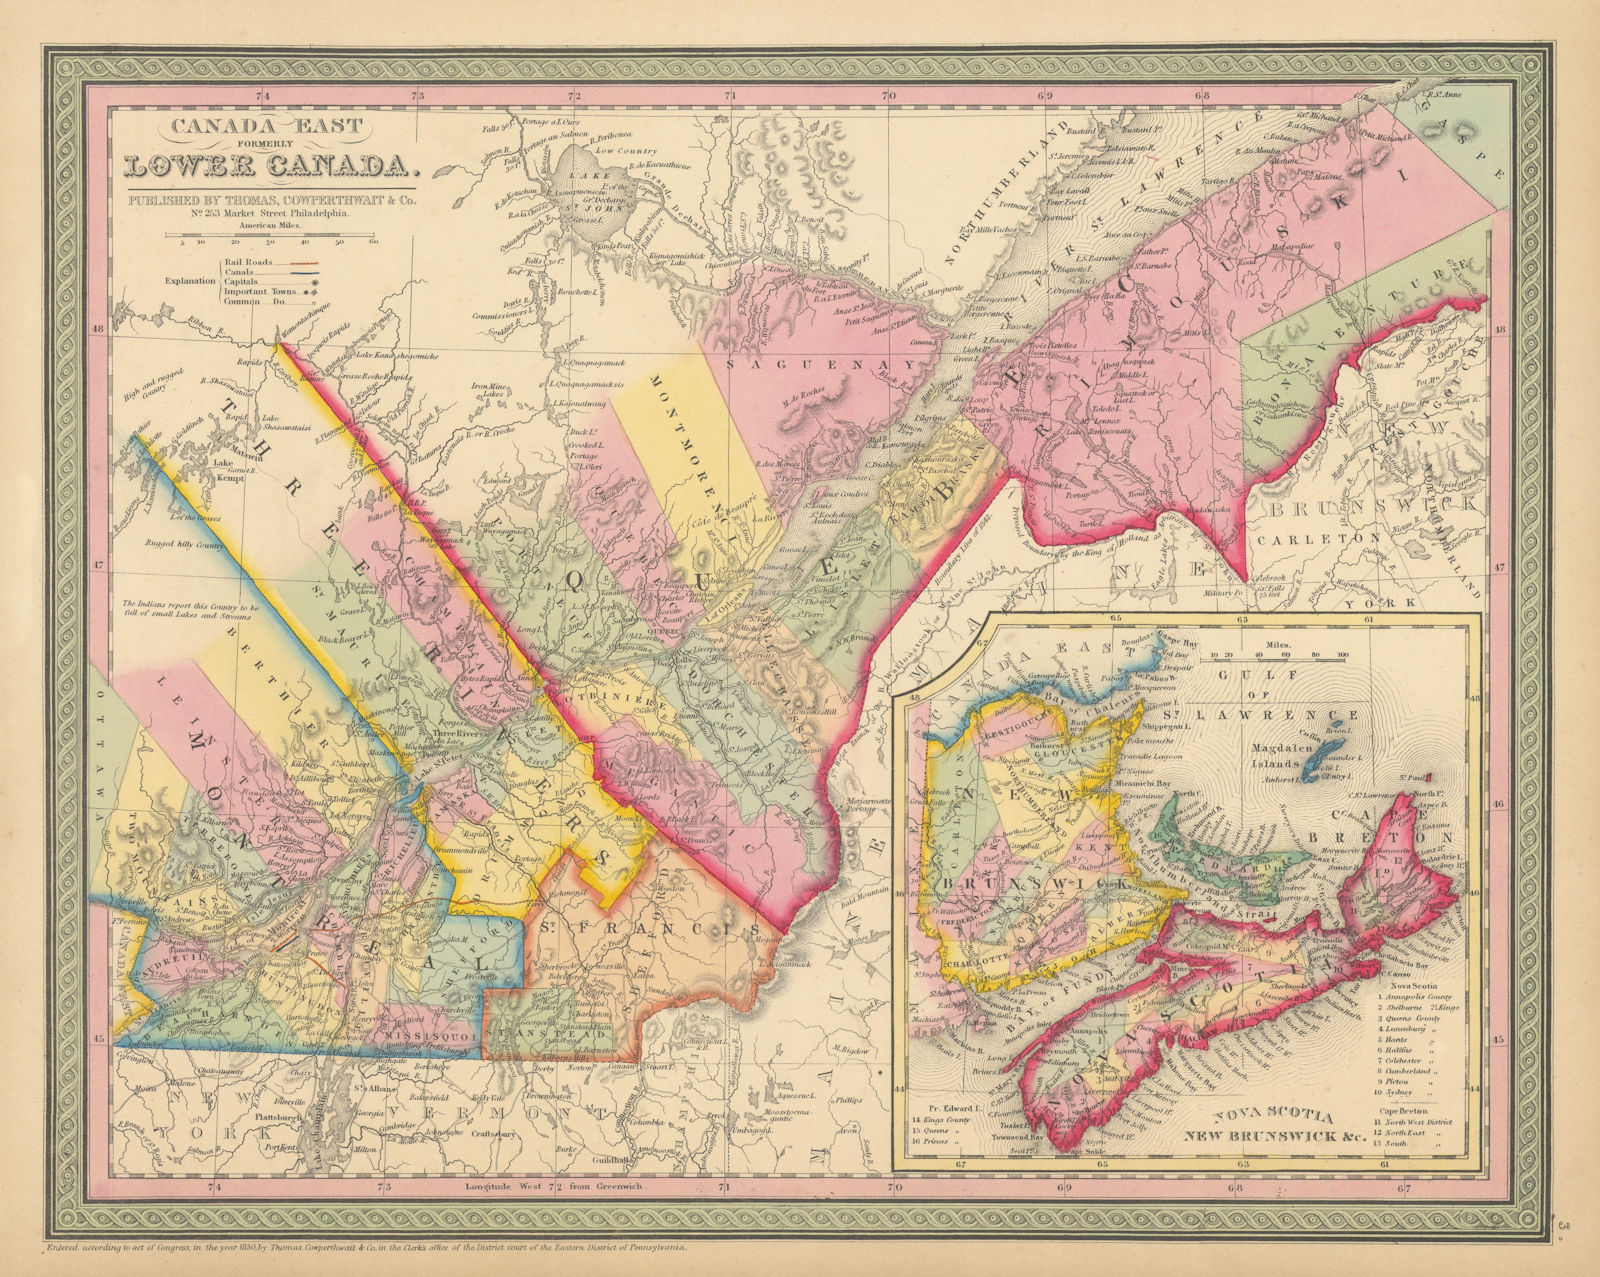 Canada East formerly Lower Canada. Nova Scotia & NB. COWPERTHWAIT 1852 old map